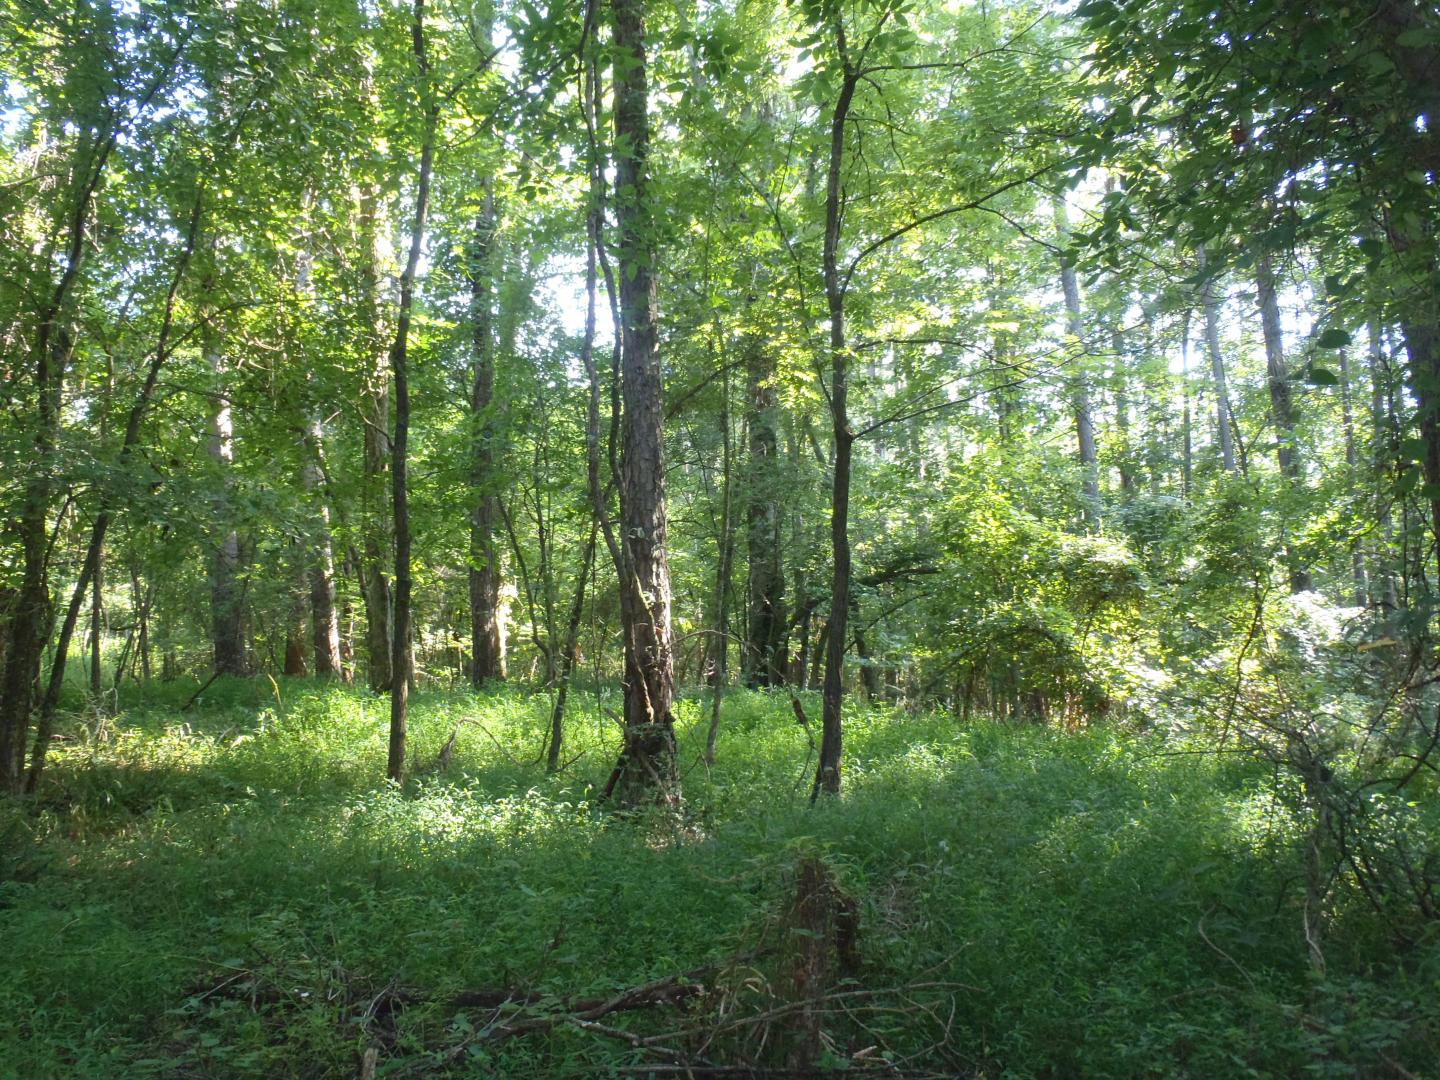 Invasive Grass Fills Understory in Hardwood Forest